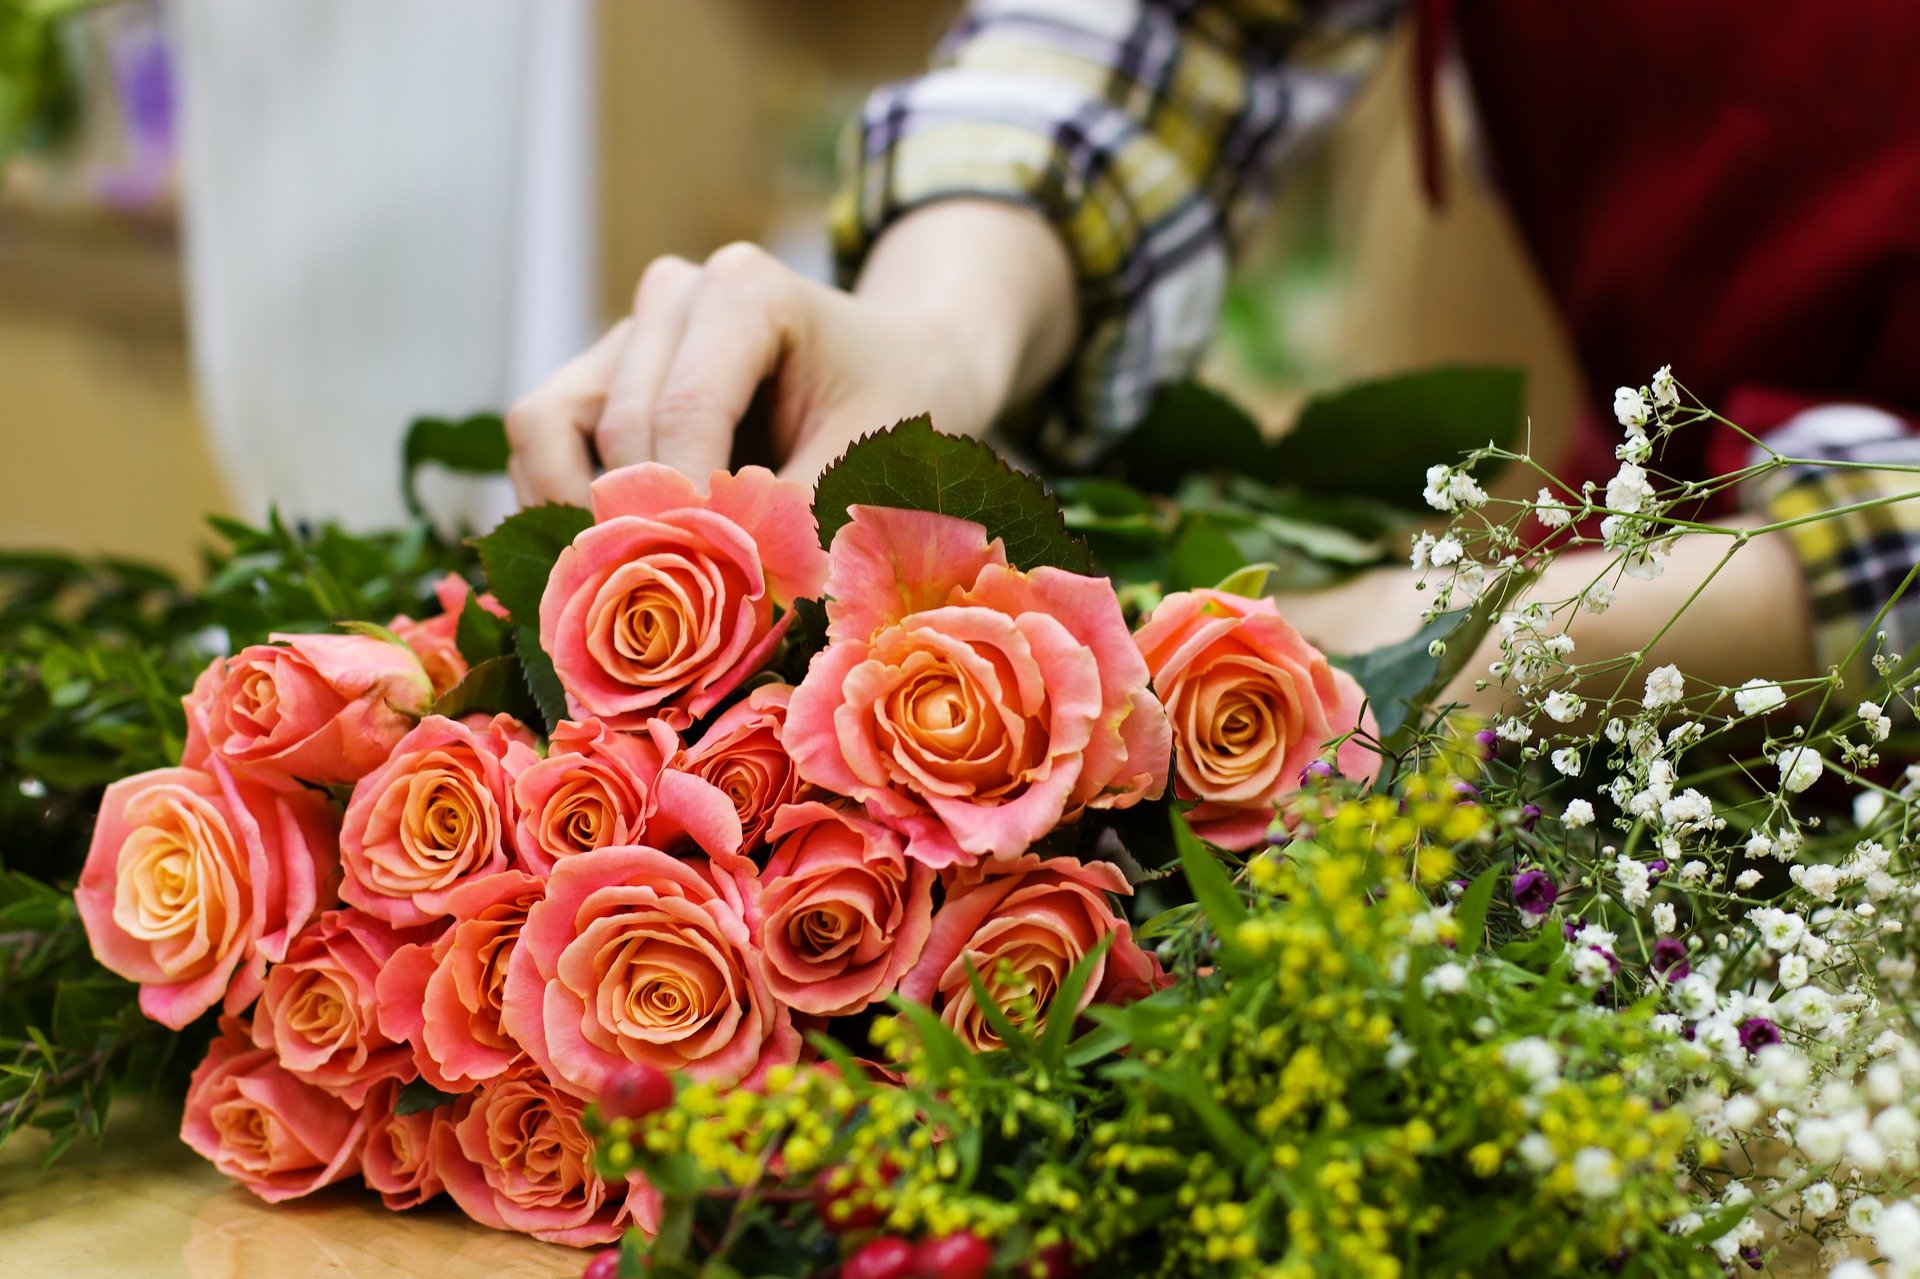 A florist putting together a bouquet. | Photo: Pixabay